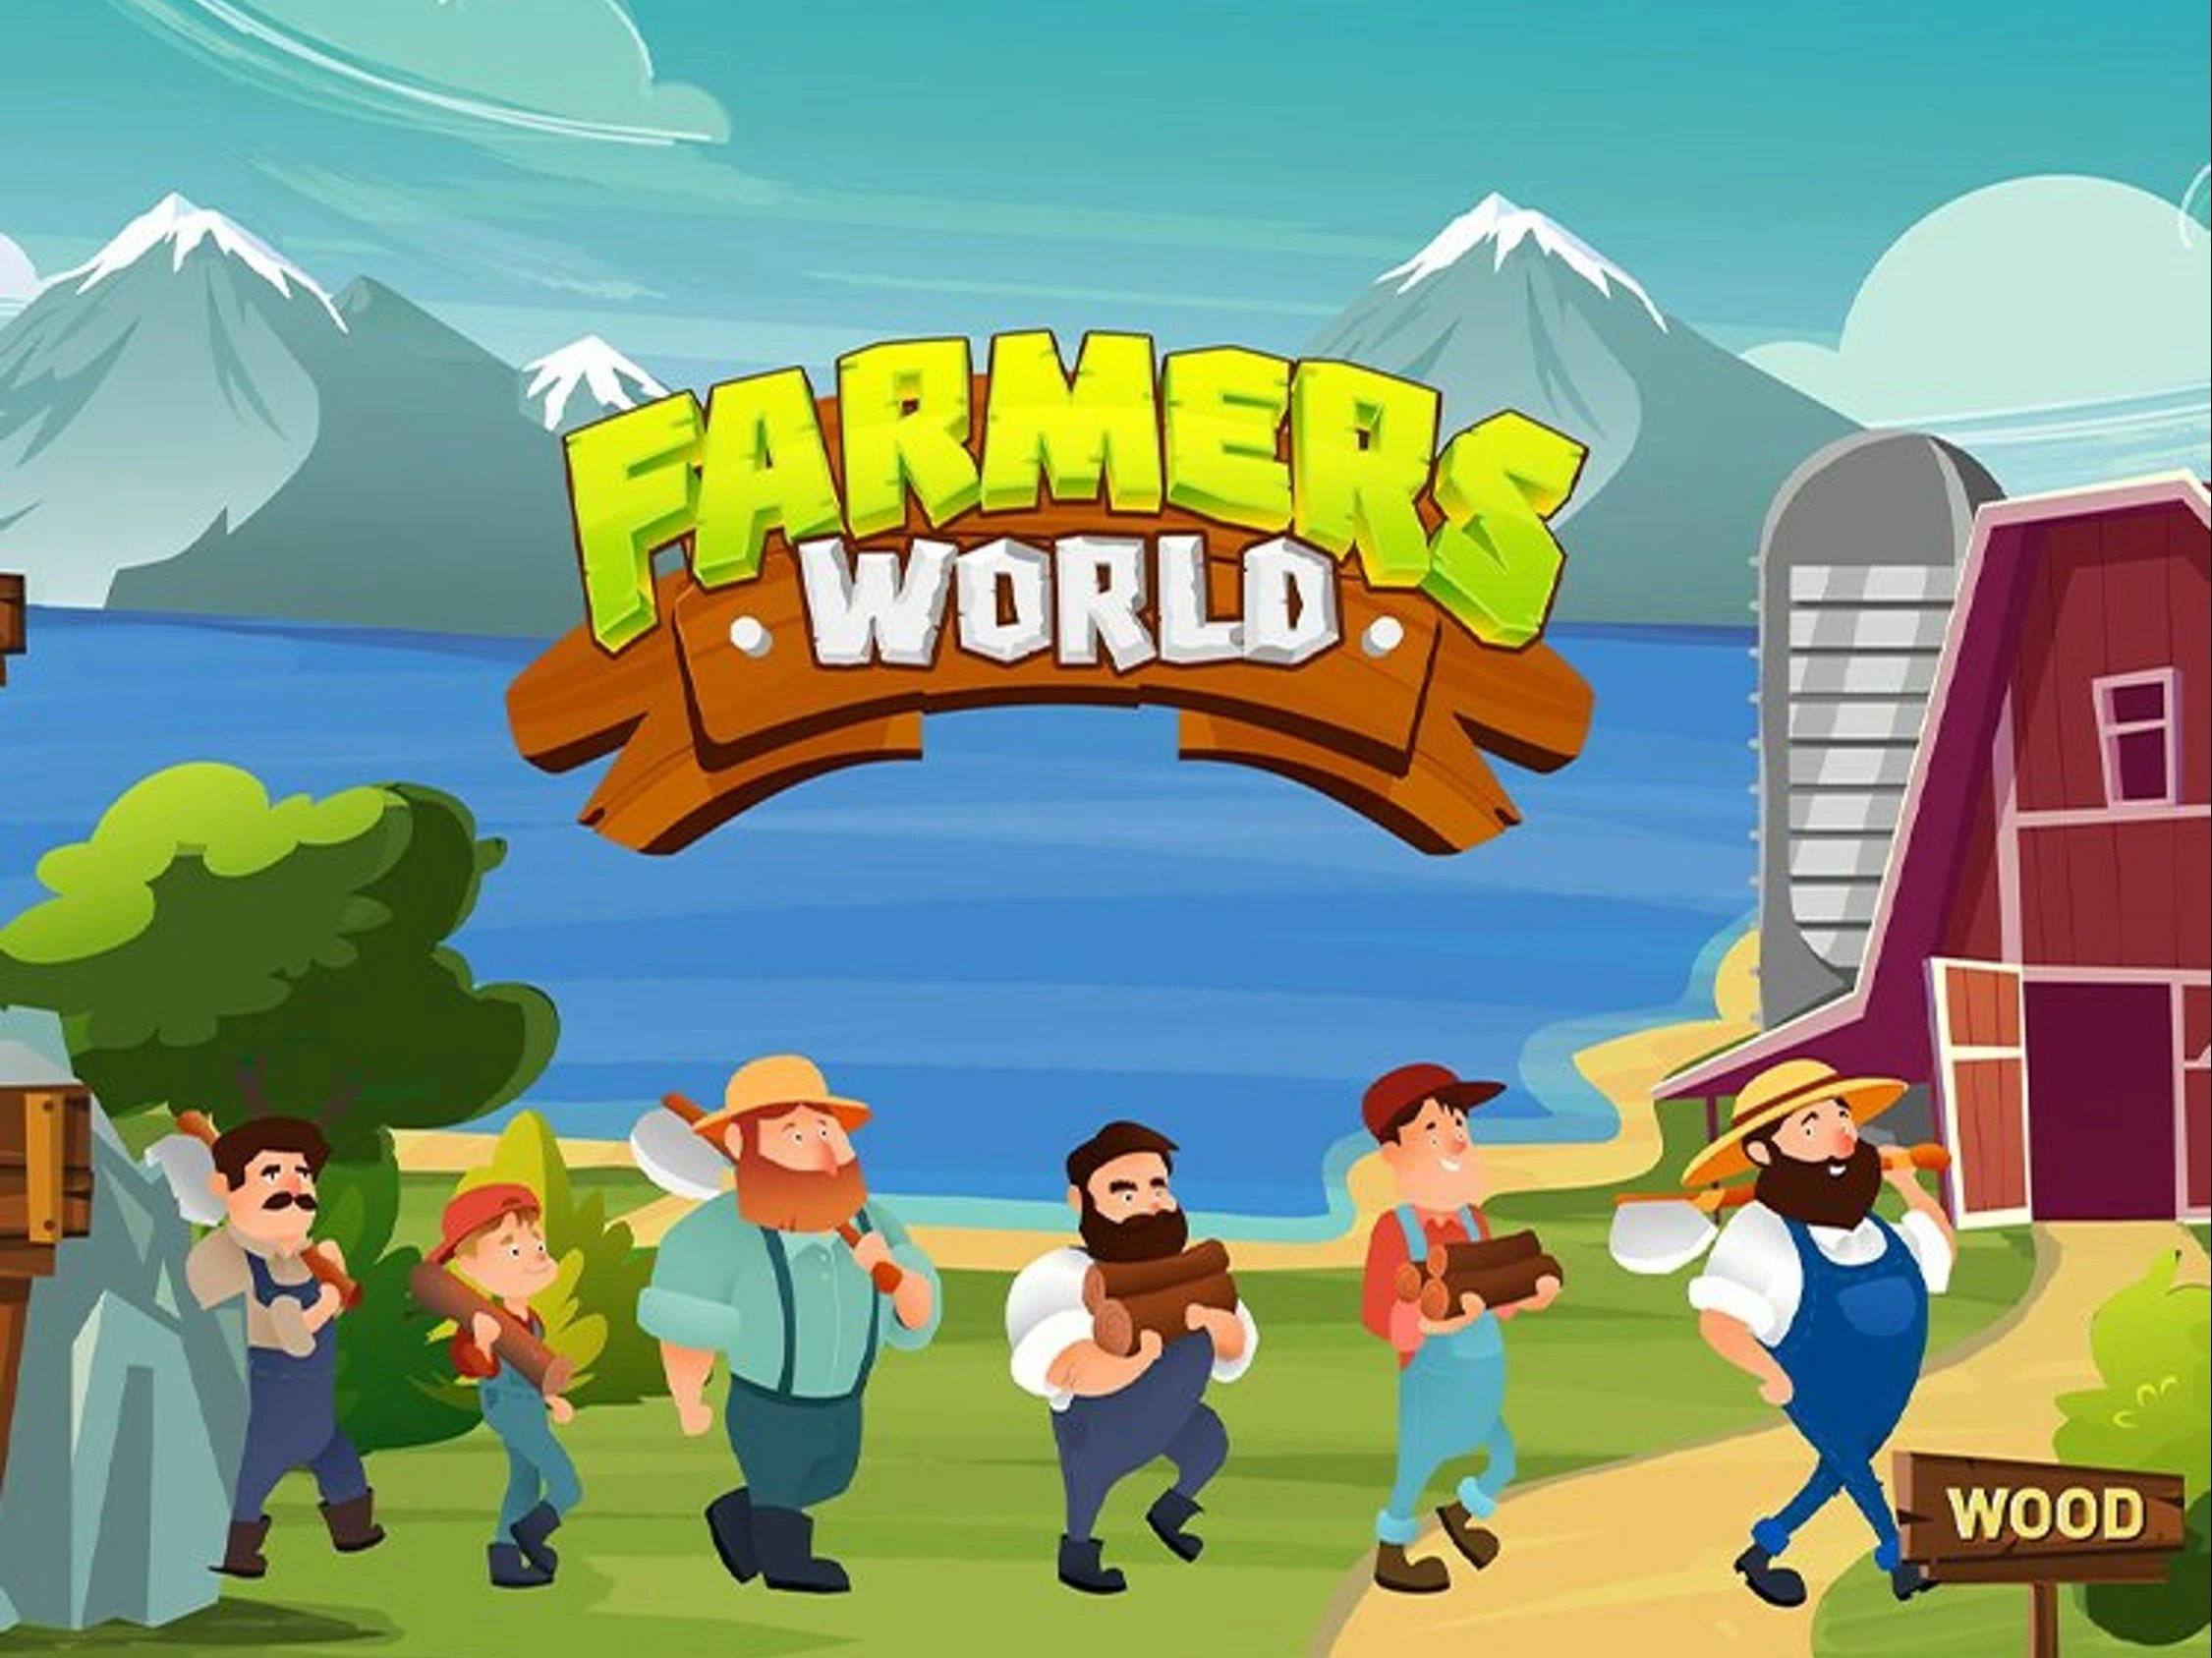 Farmers World